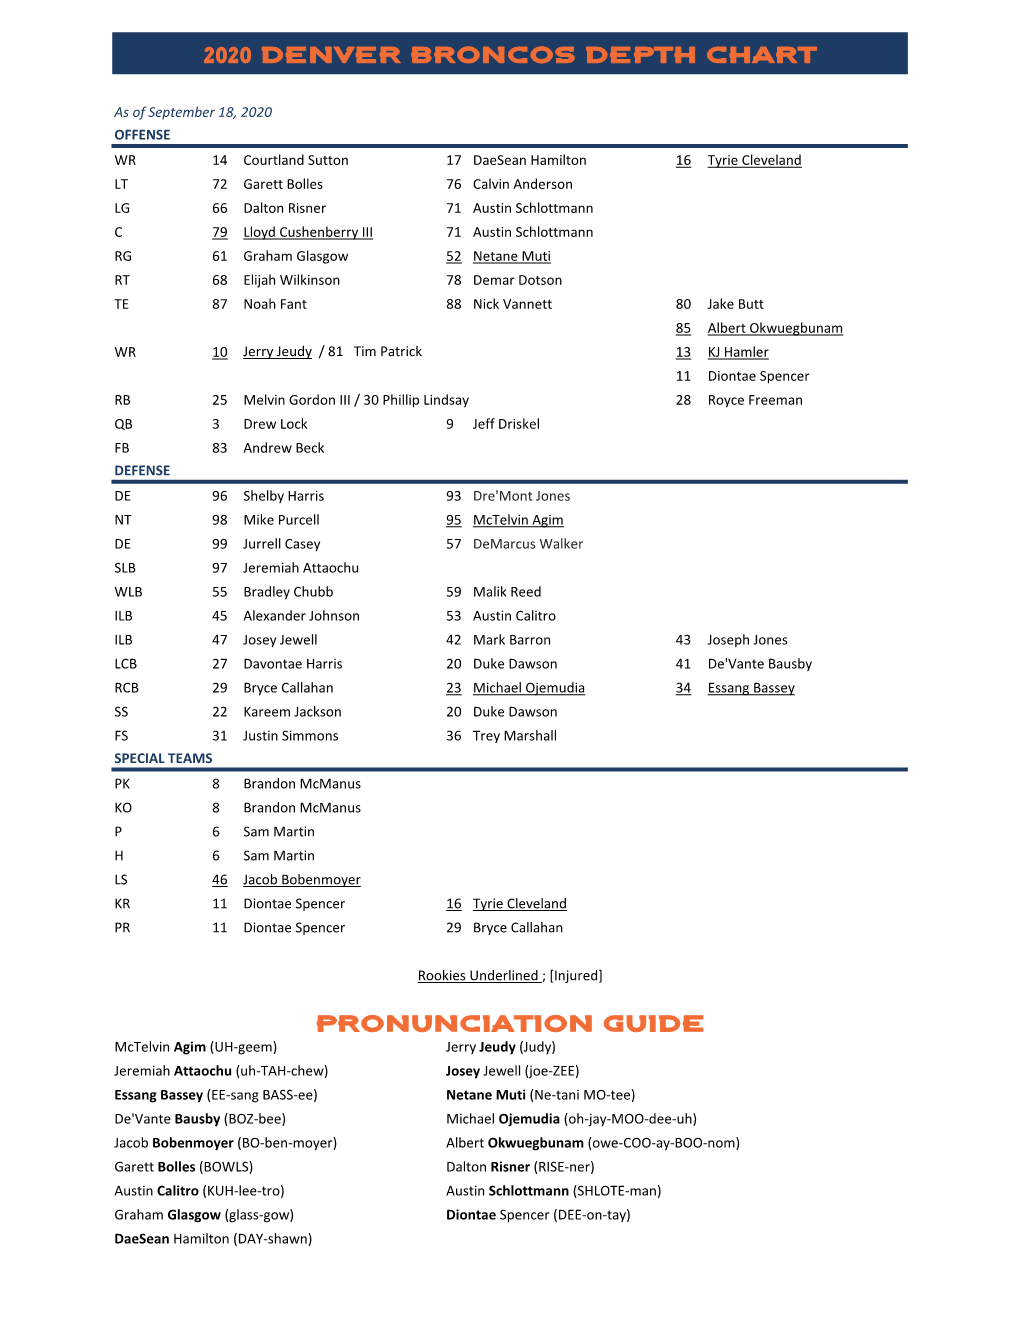 2020 Denver Broncos Depth Chart Pronunciation Guide